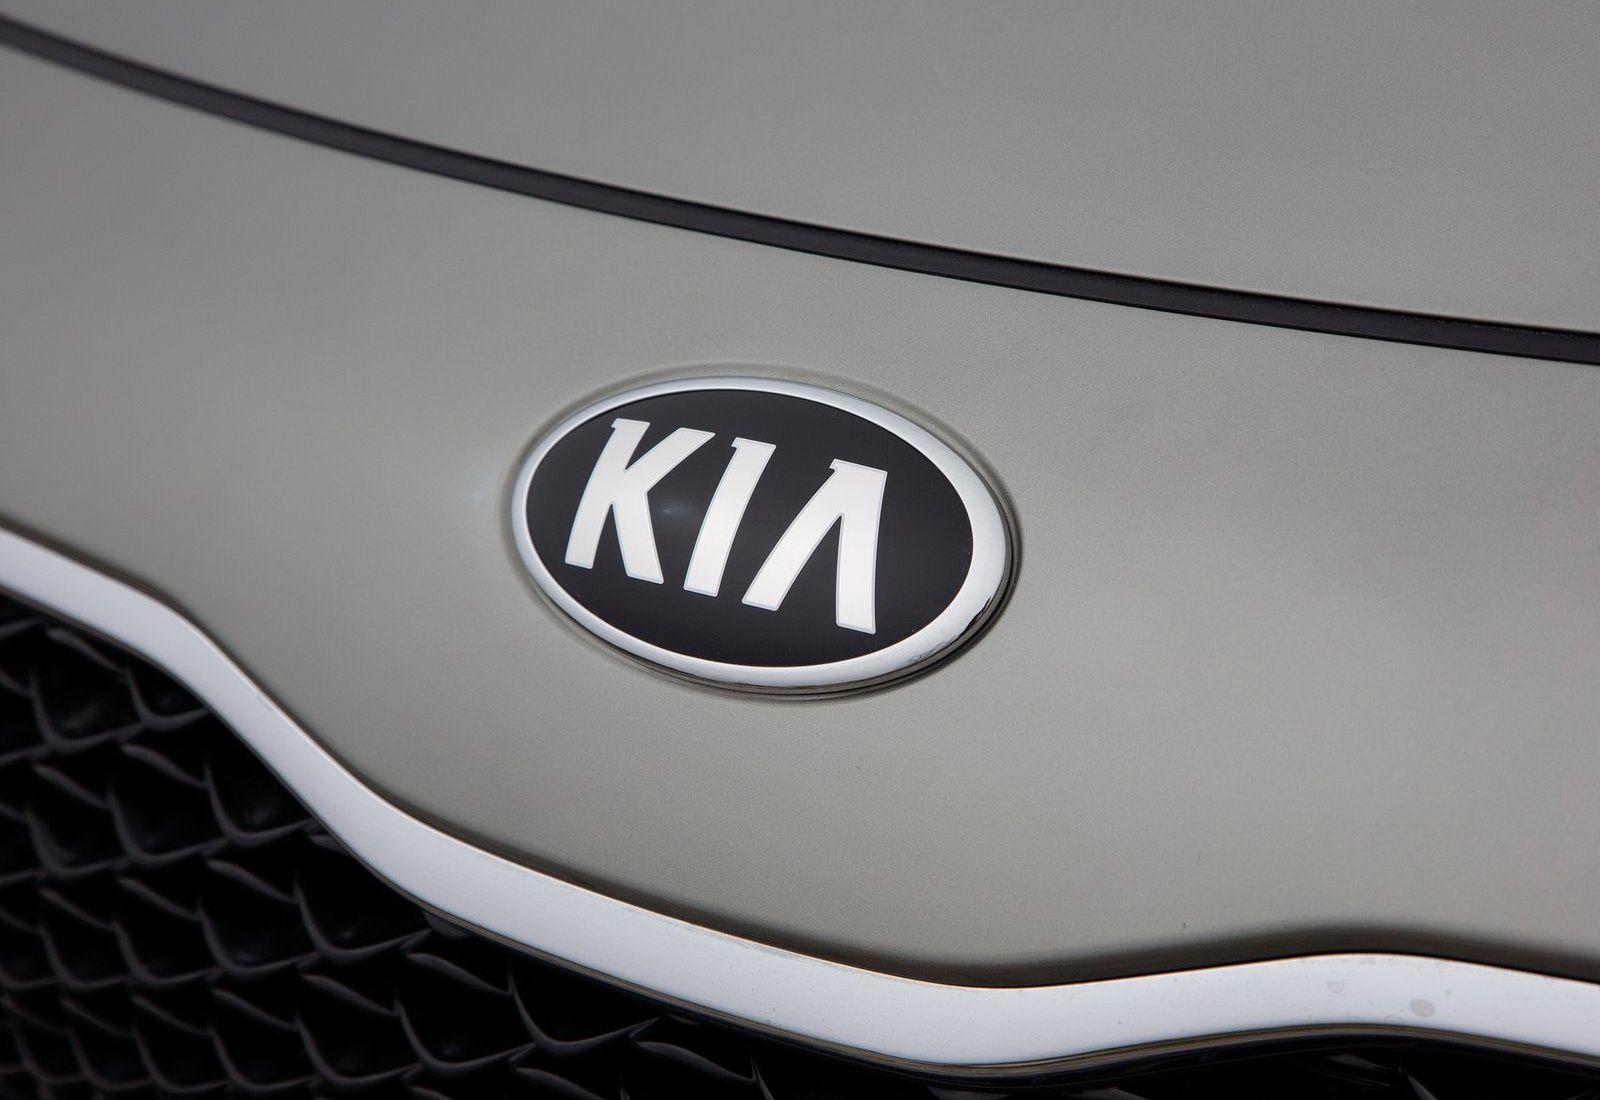 American Honda and Kia Car Company Logo - Kia Logo, Kia Car Symbol Meaning and History. Car Brand Names.com